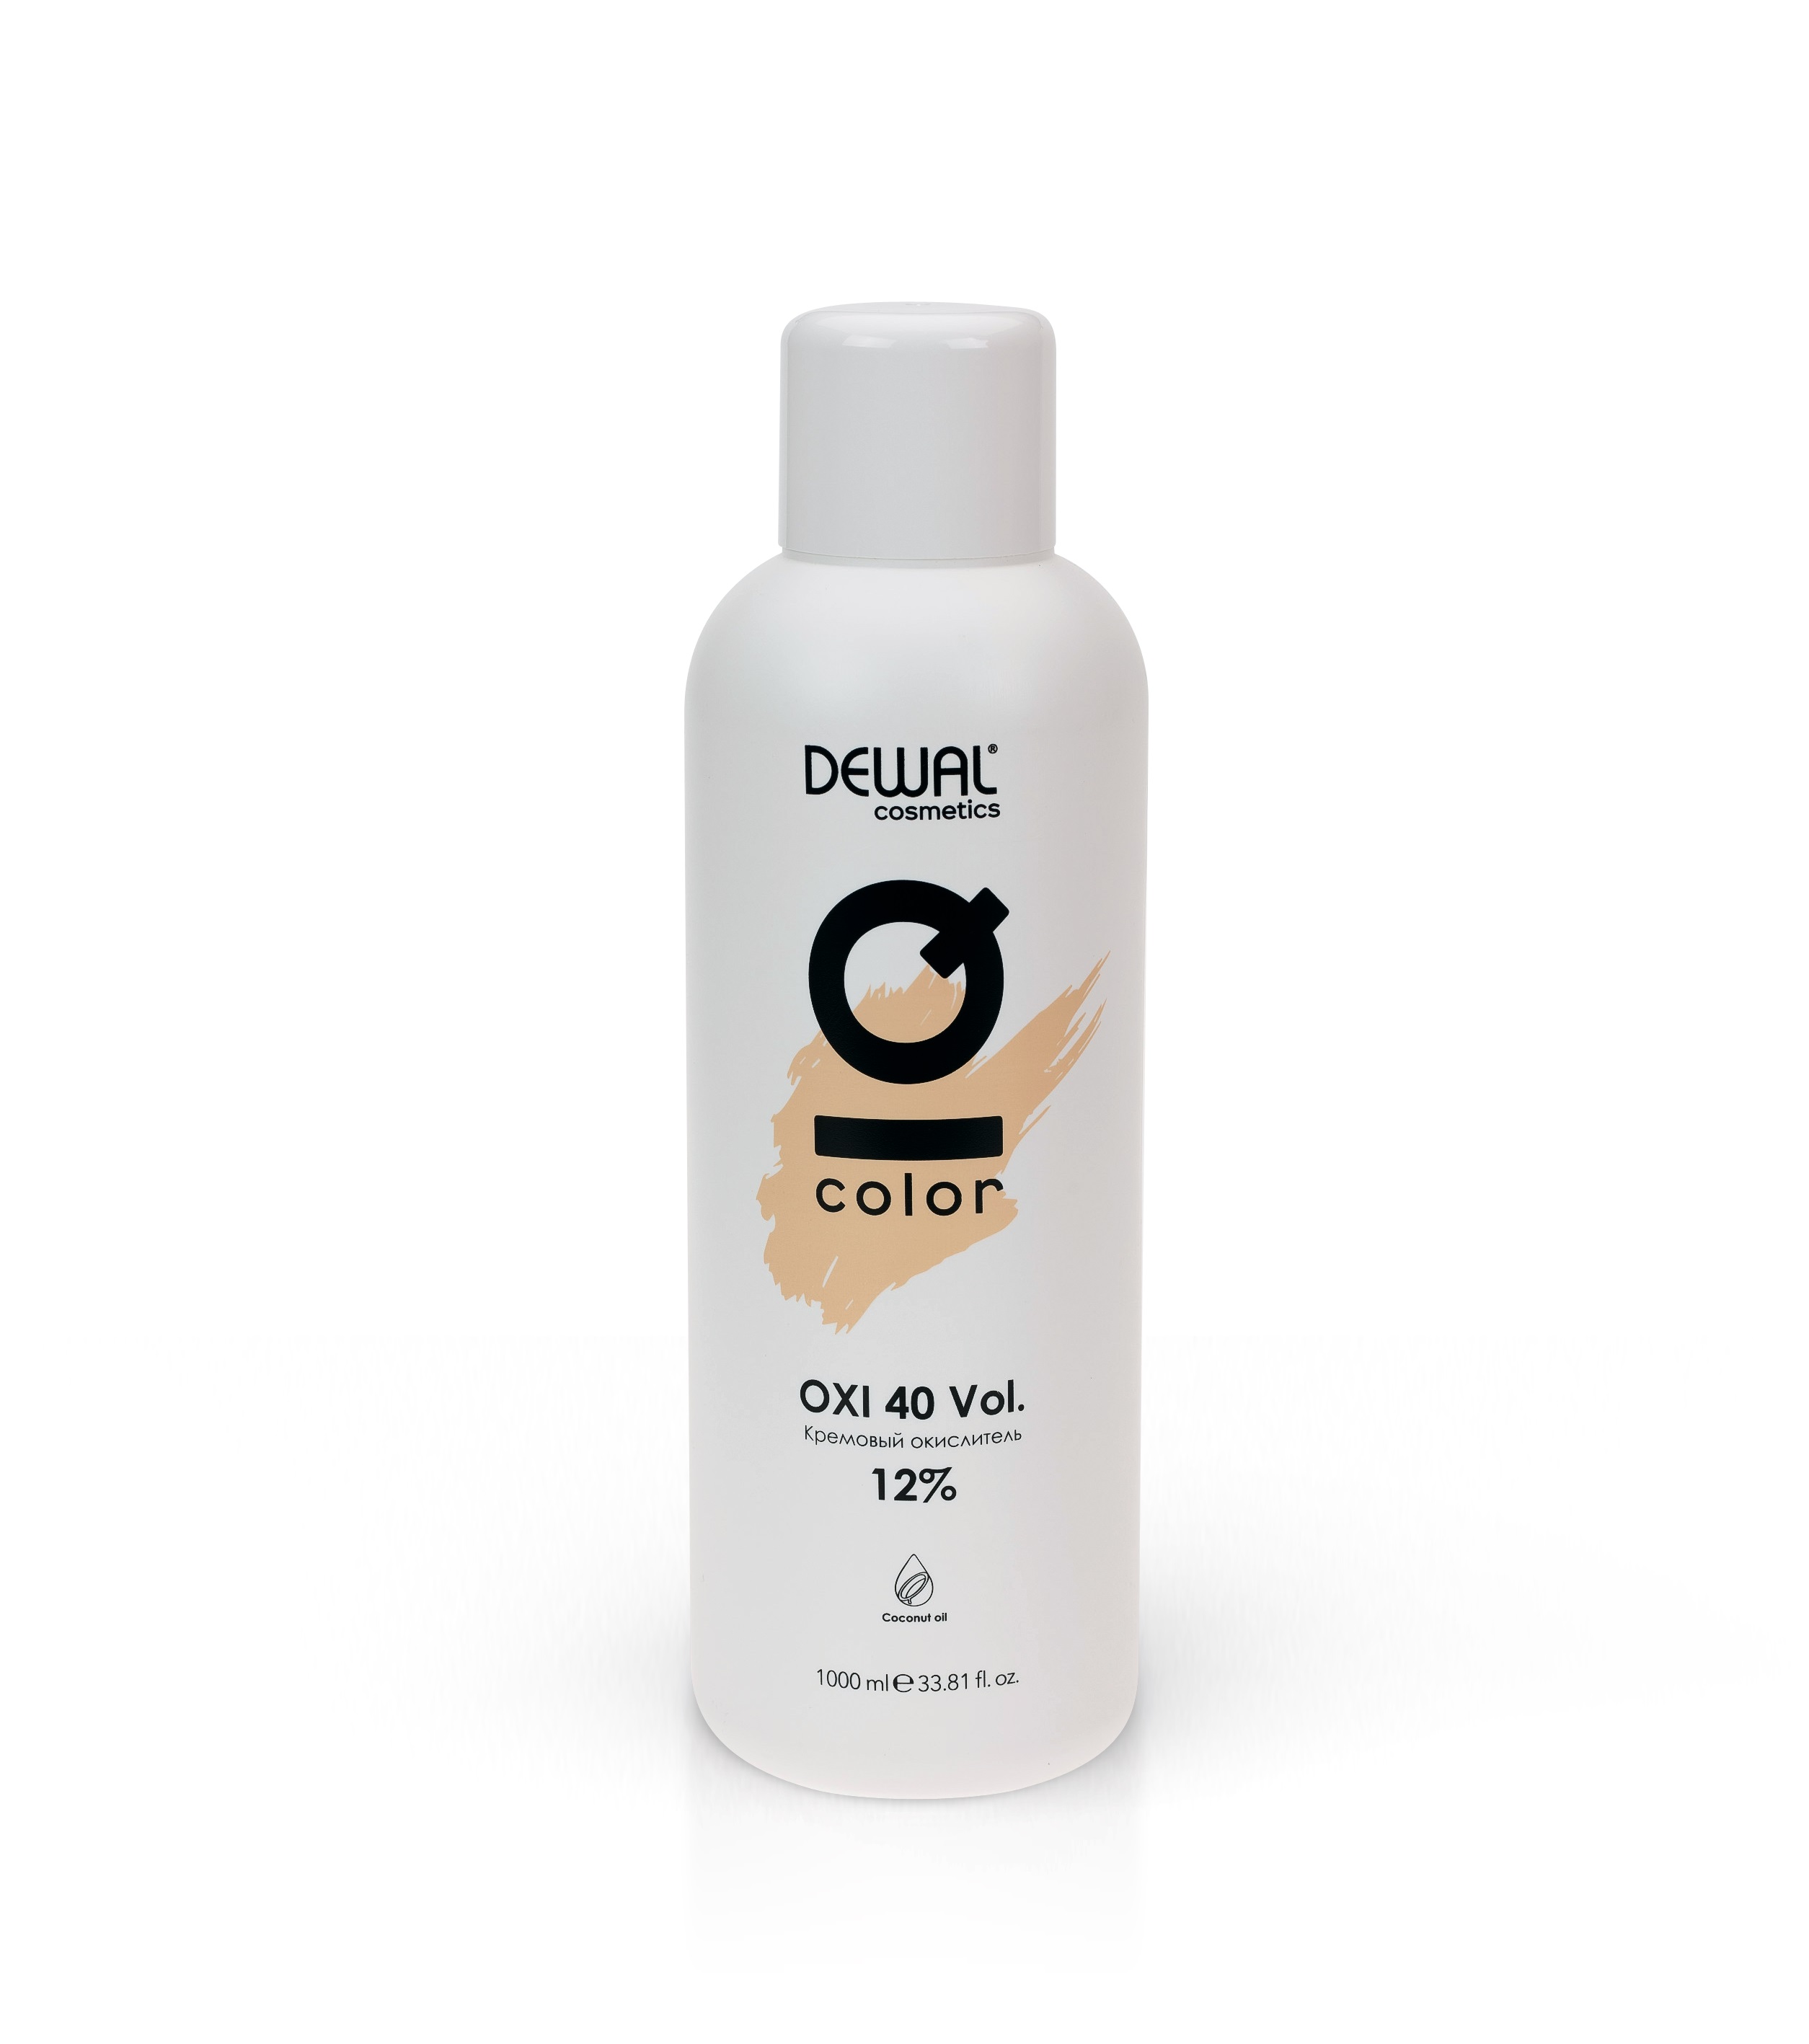 Кремовый окислитель IQ COLOR OXI 12% DEWAL Cosmetics pearlescent powder 20x set diy soap making colorant crystal mud epoxy resin color dye pigment lip gloss nails decor gift